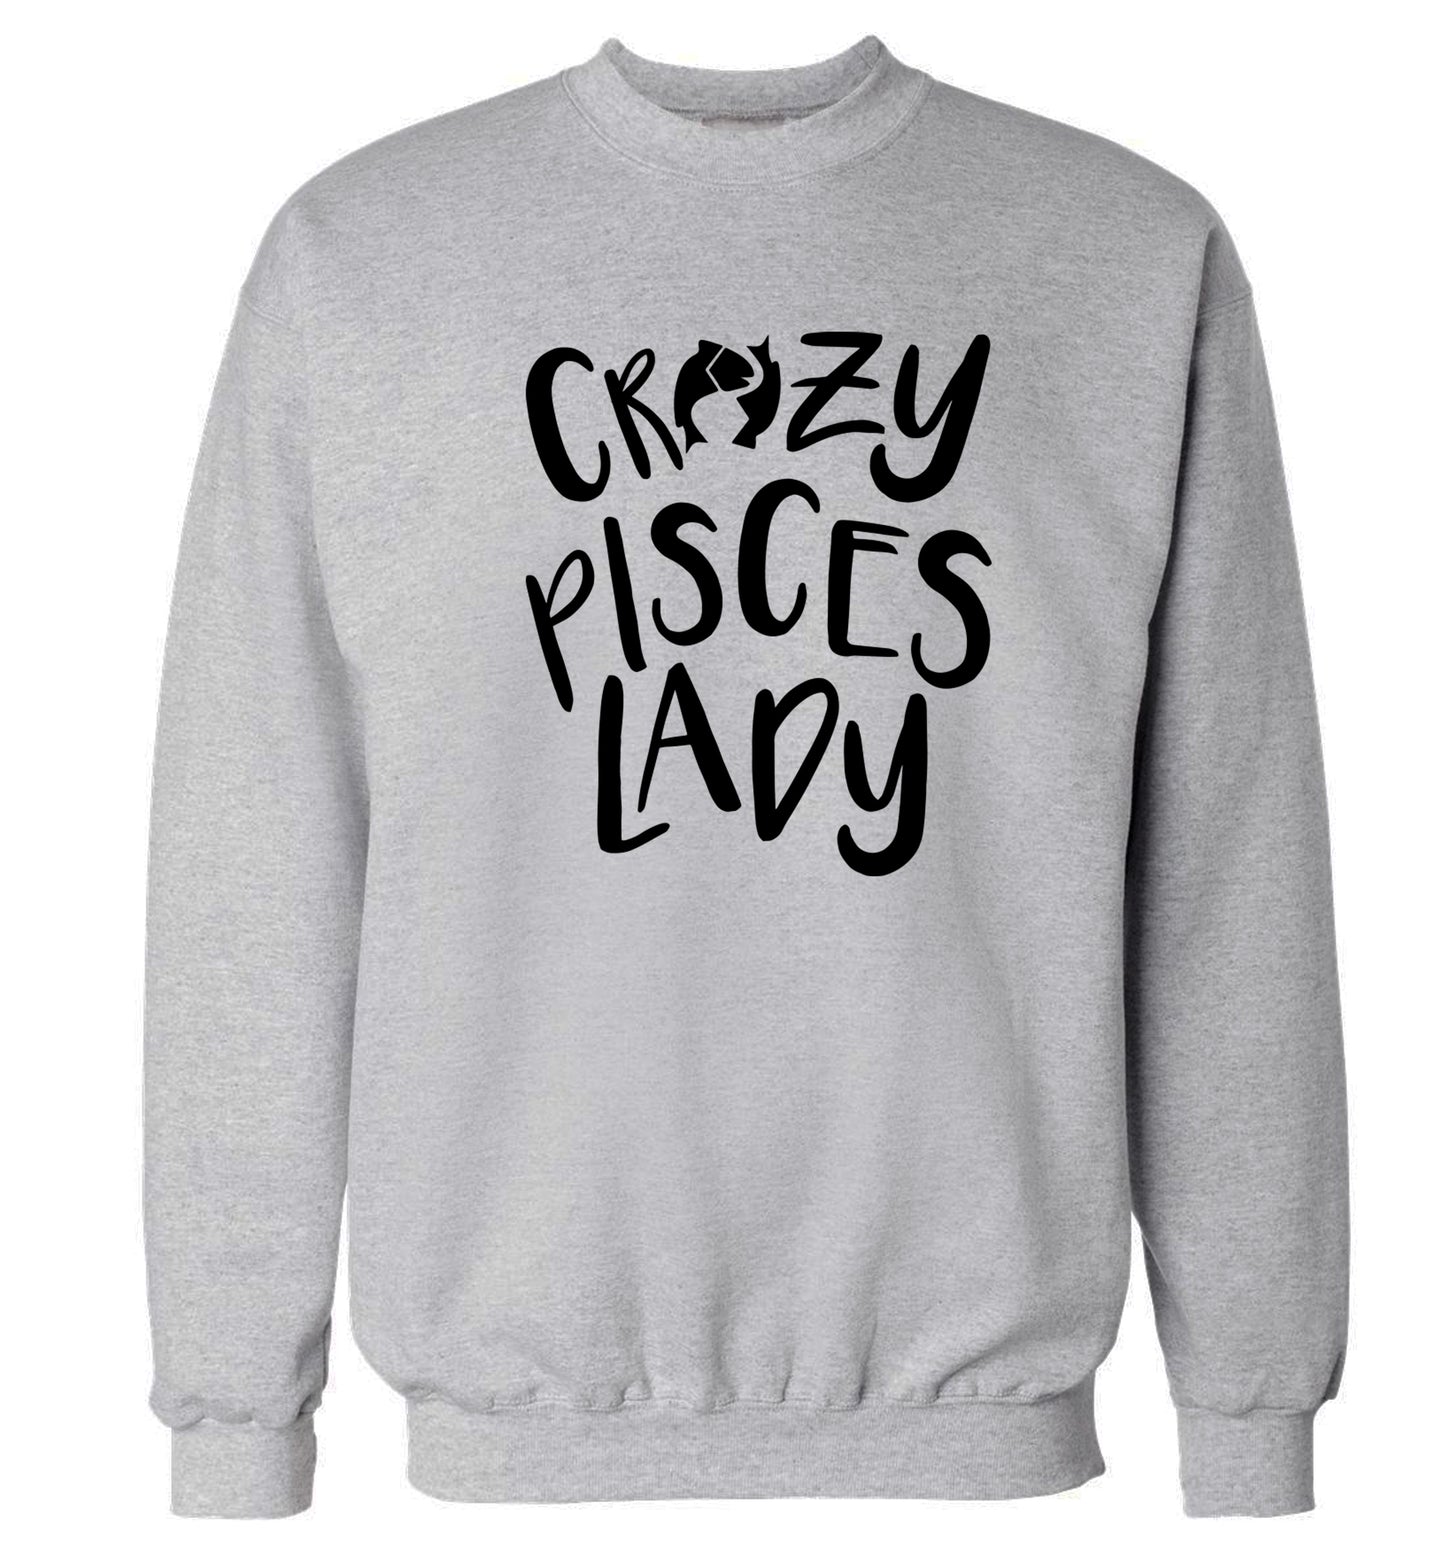 Crazy pisces Lady Adult's unisex grey Sweater 2XL